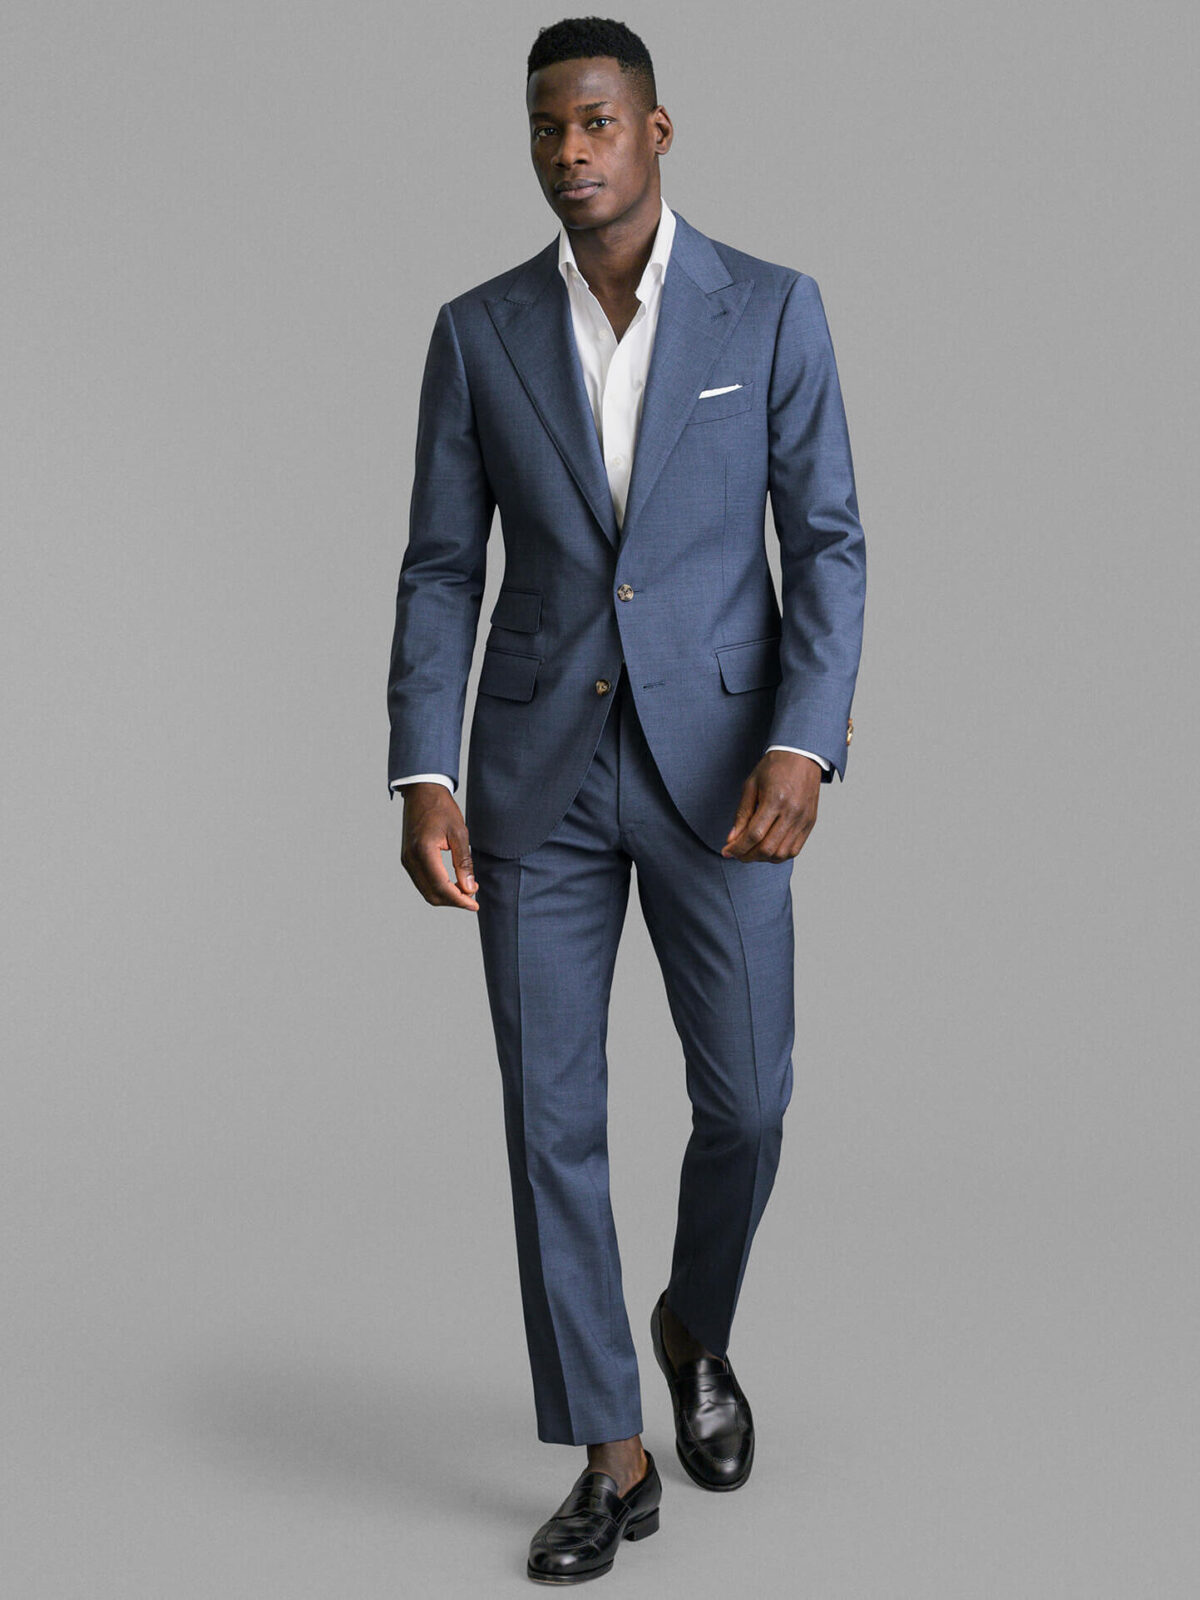 Loro Piana Fabric Grey S150s Mercer Suit - Custom Fit Tailored Clothing